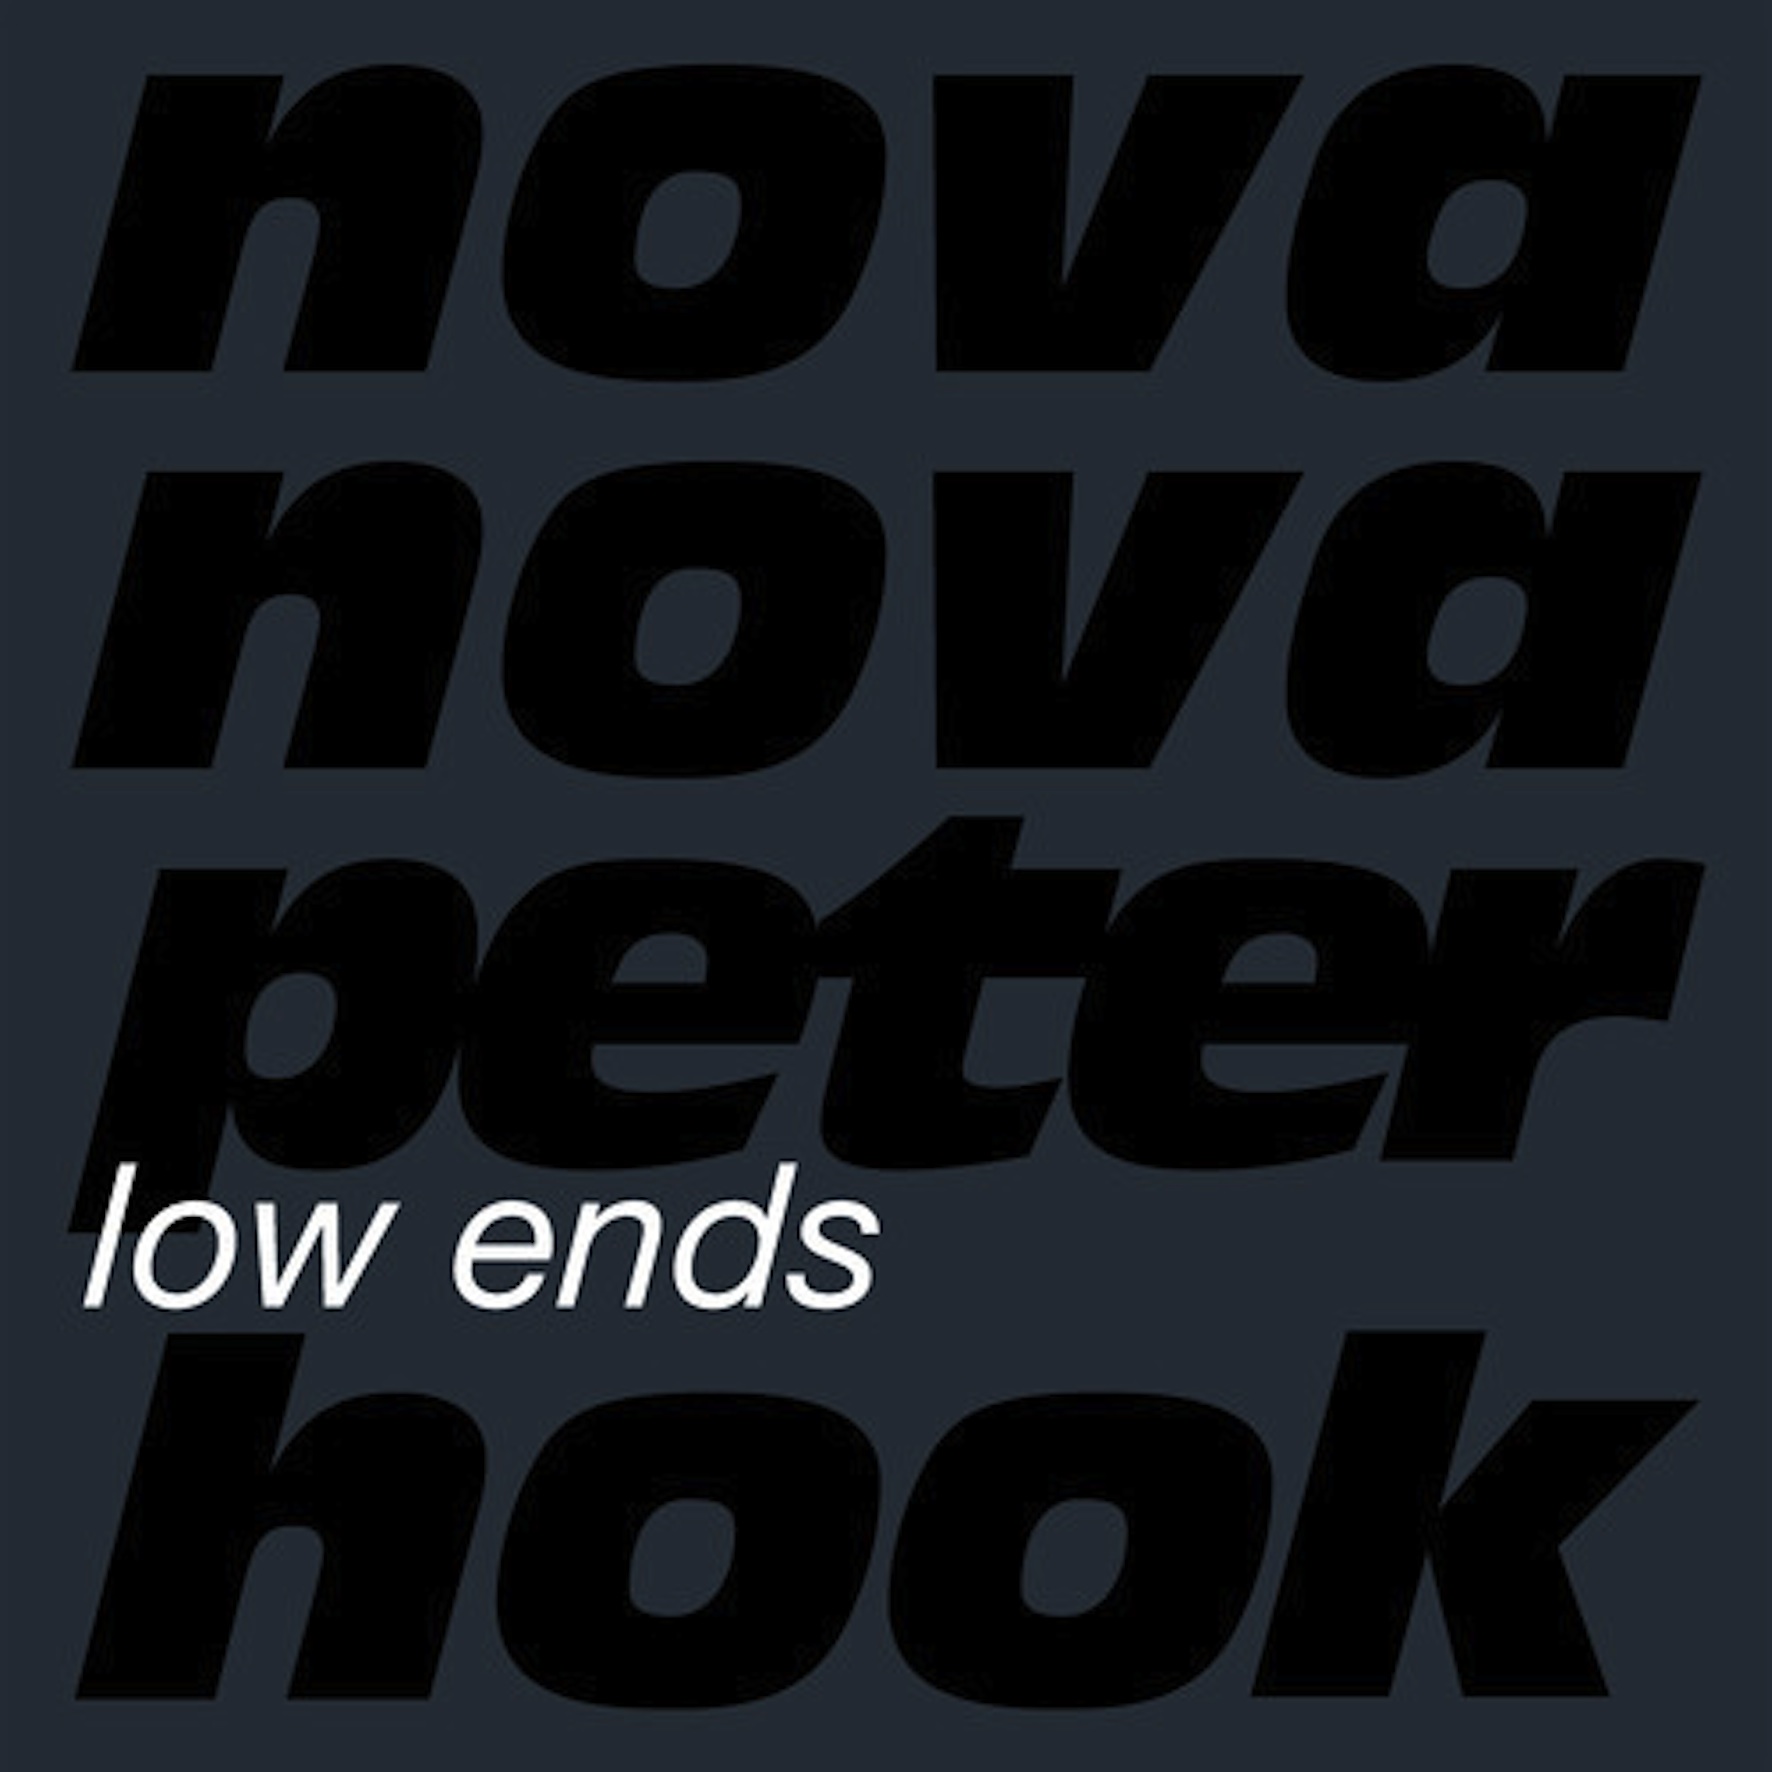 Reviews, Promo`d, Test Pressing, Dr Rob, Nova Nova, Peter Hook, New Order, Low Ends, Atal Music